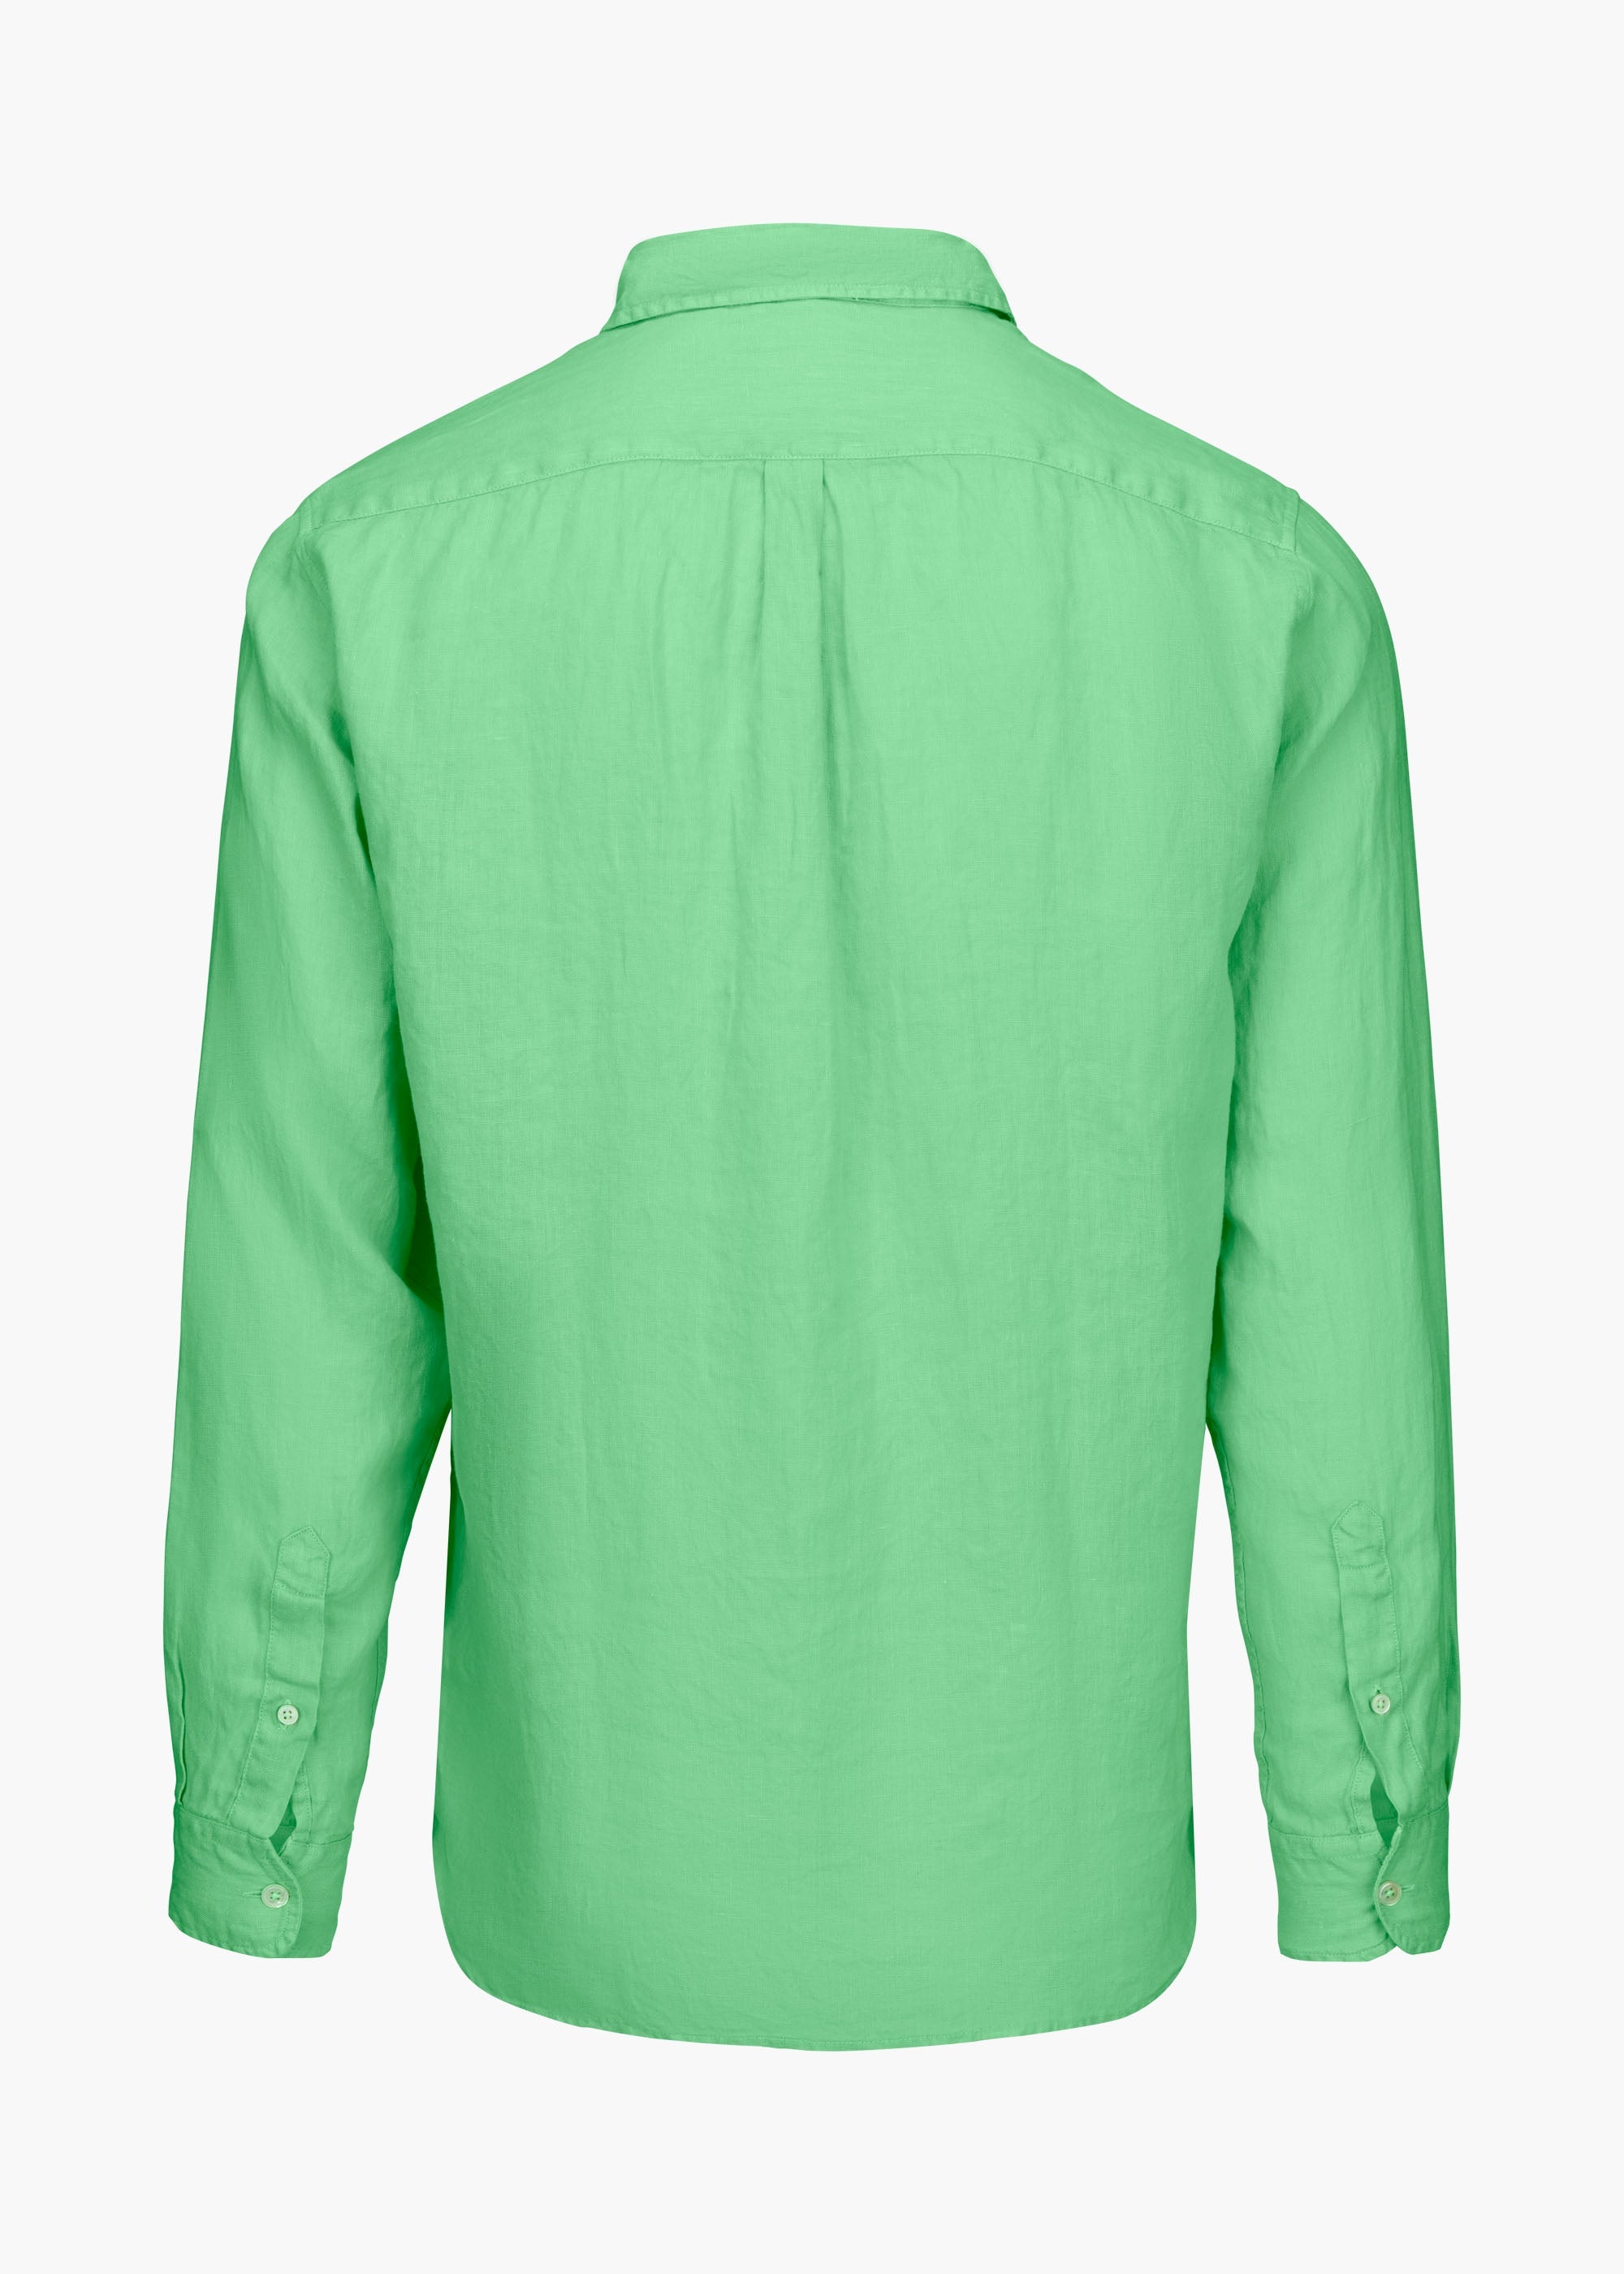 Amalfi Linen Shirt - background::white,variant::Absinthe